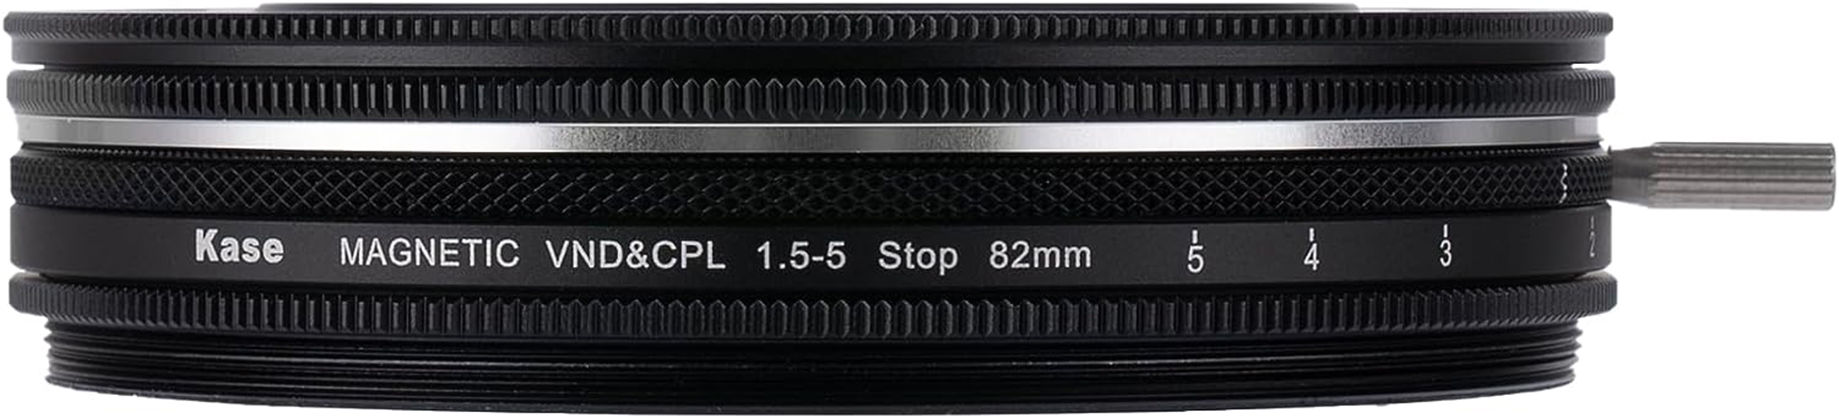 1021501_C.jpg - Kase Magnetic Circular Filter Video Kit 82mm VND-CPL 1.5-5 / Black Mist